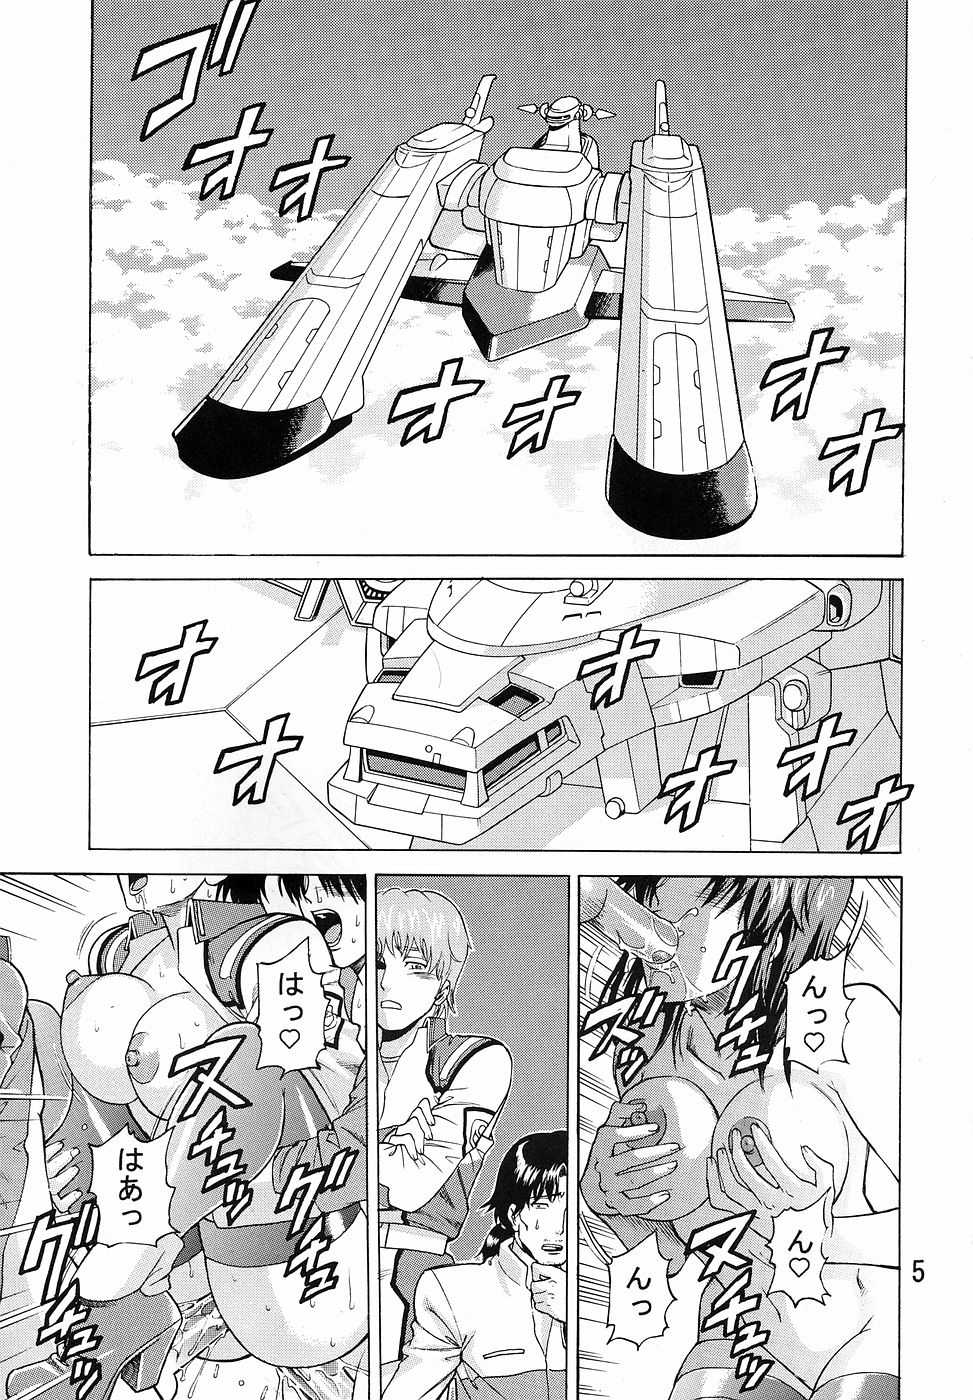 [Bakuretsu Fuusen] Burst!! Vol 2 (Gundam Seed) 973x1400 